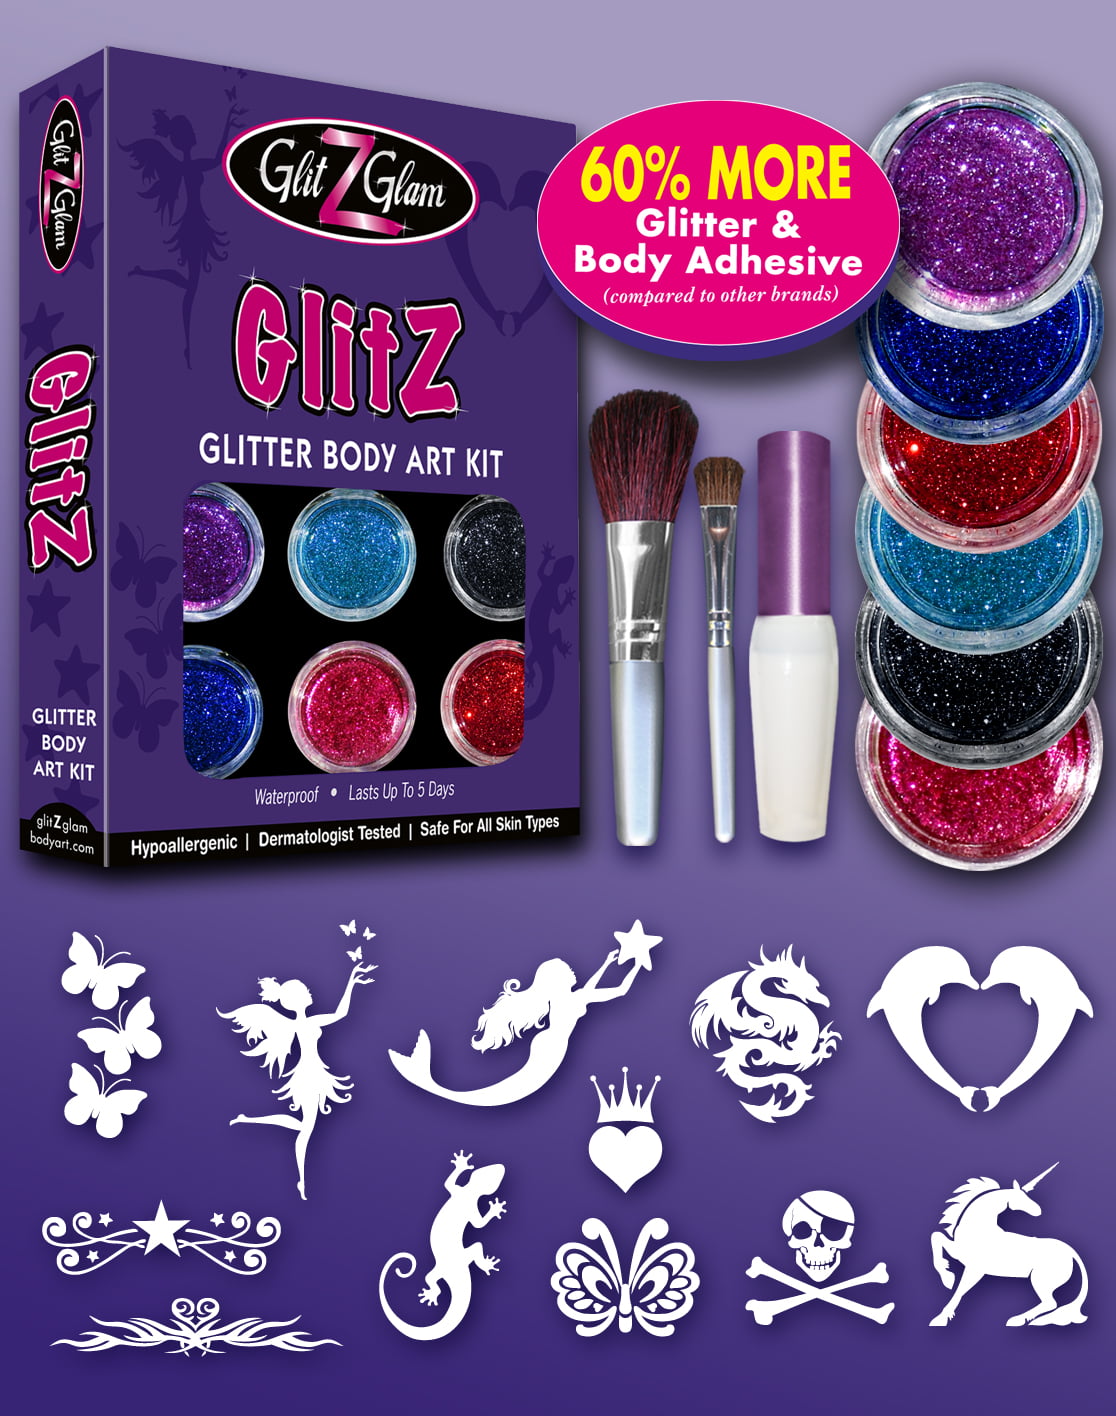 Glitter Tattoo Kit- NEW GLITZ Children Tattoos by GlitZGlam Body Art 69183 with 6 Large Glitters & 12 Stencils for boys & Girls HYPOALLERGENIC and DERMATOLOGIST TESTED! 